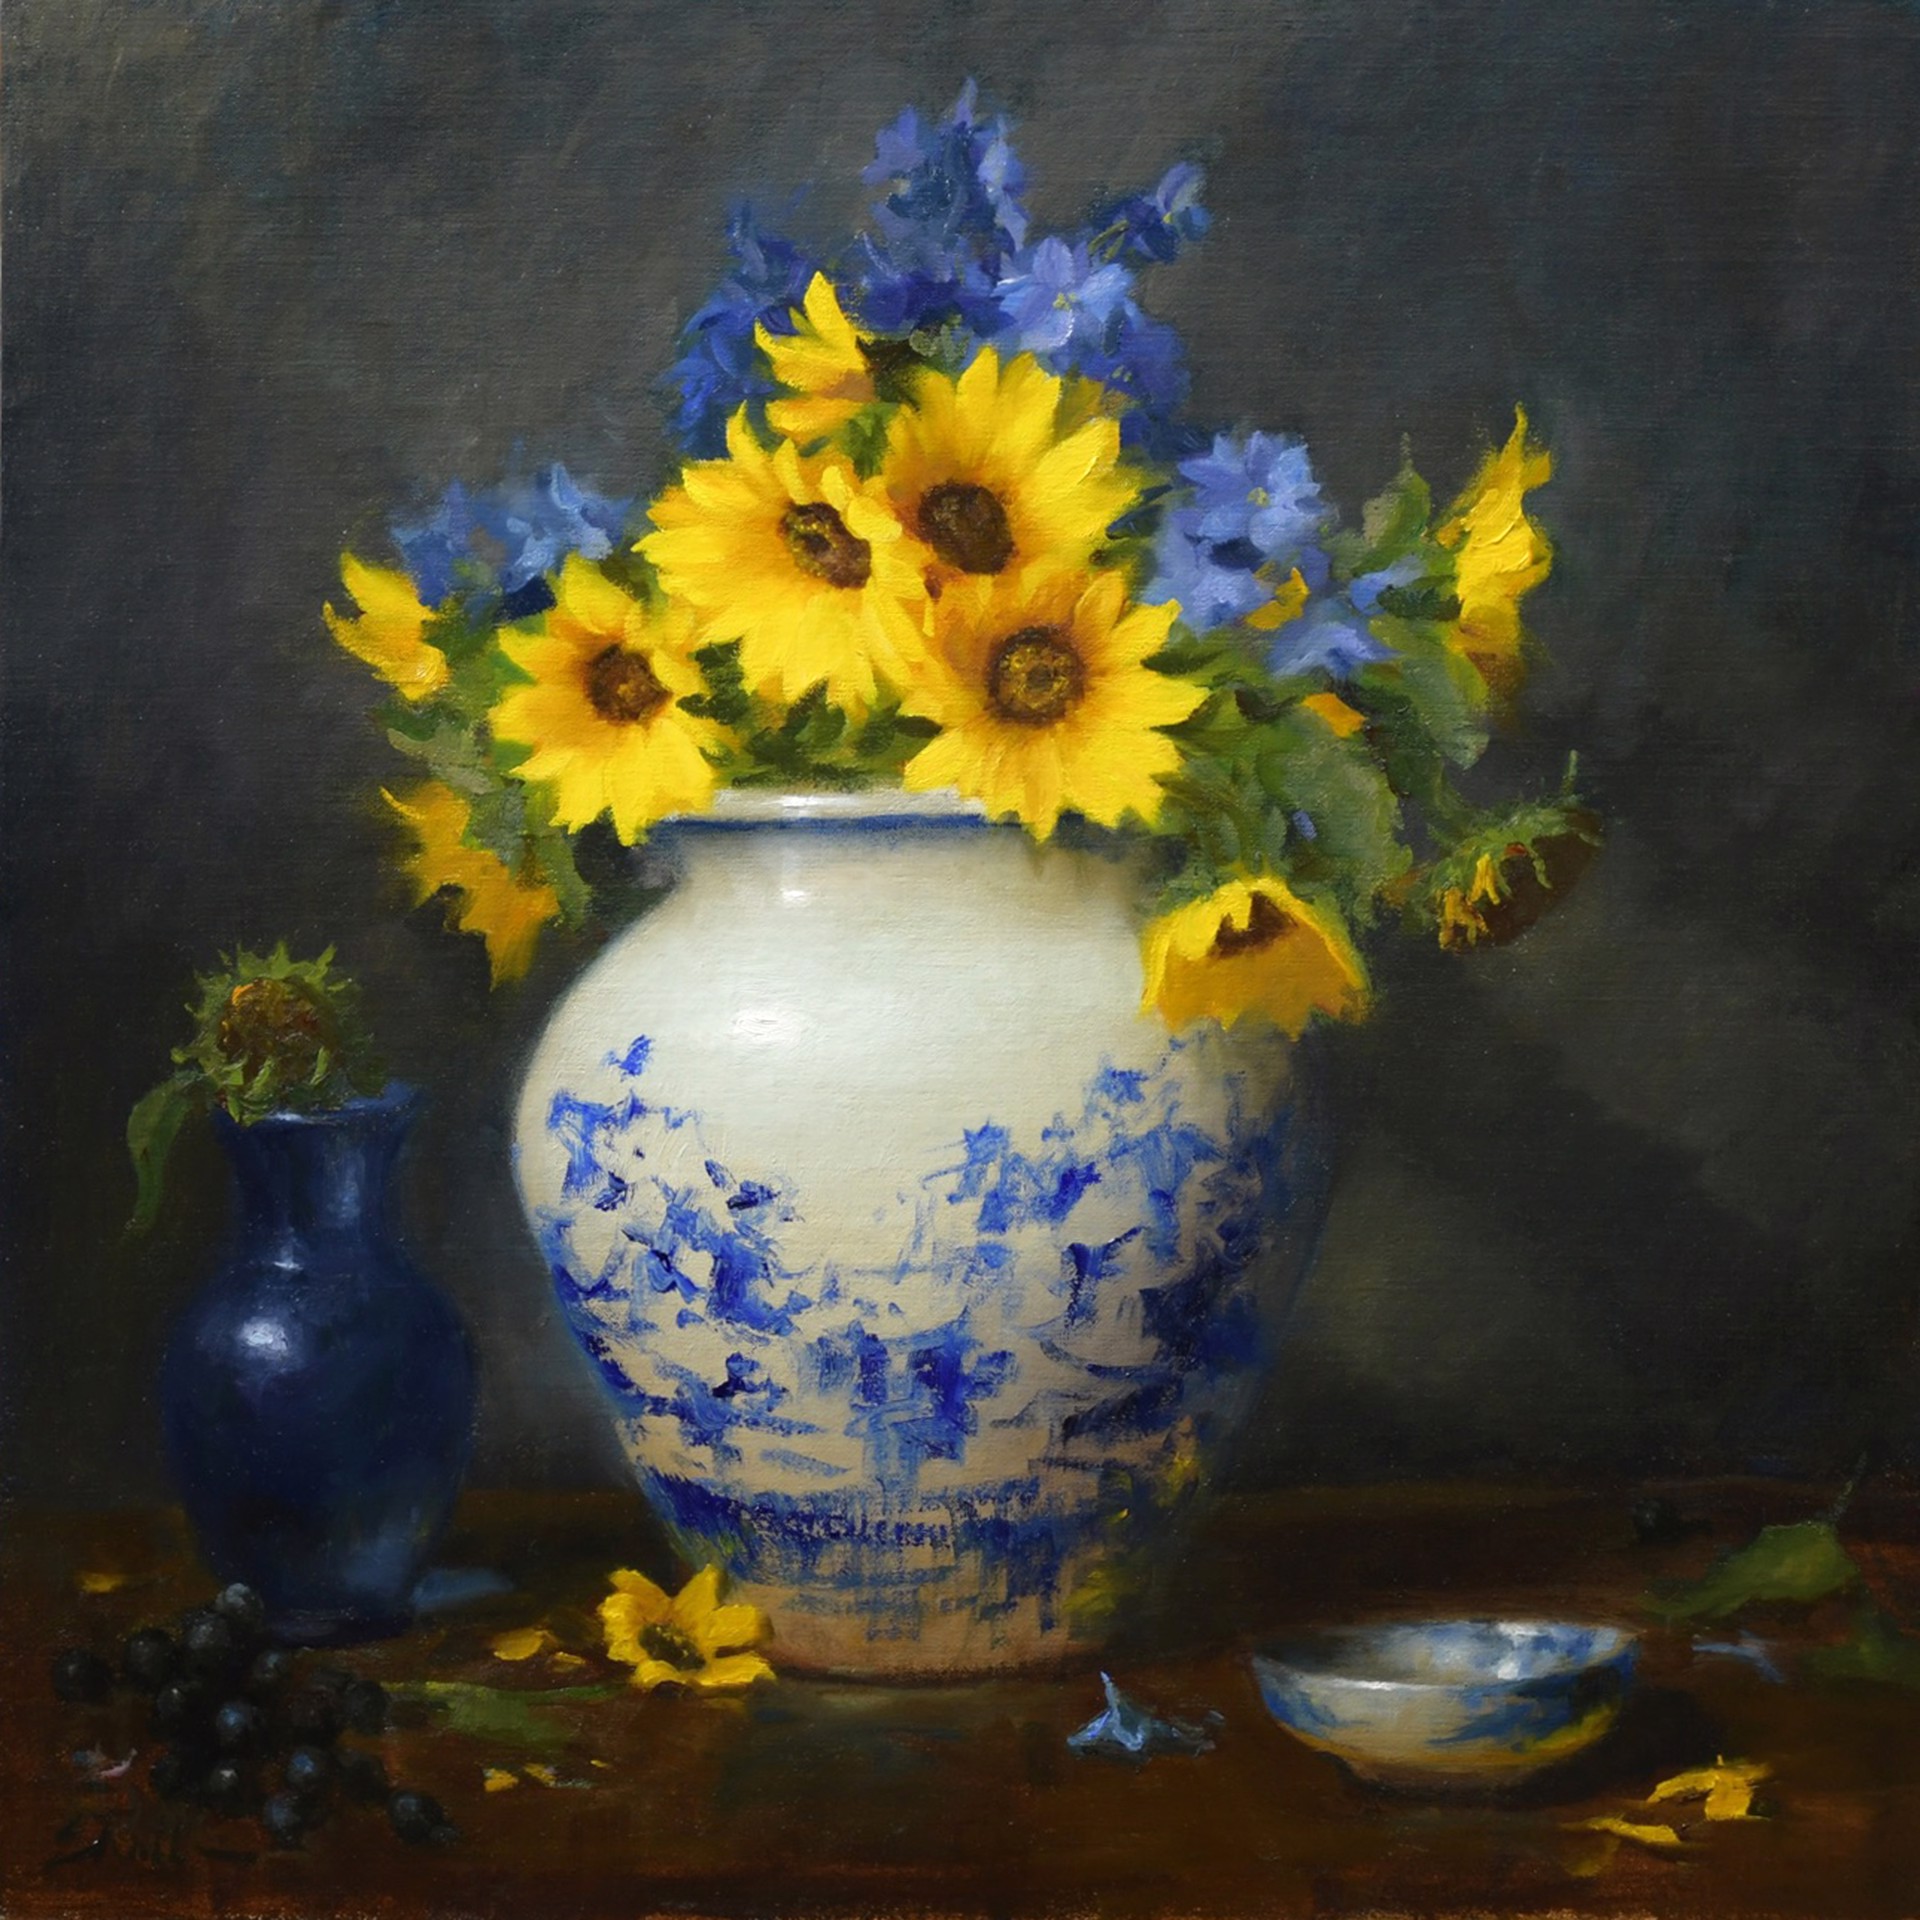 Blue and Yellow Harmony by Elizabeth Robbins